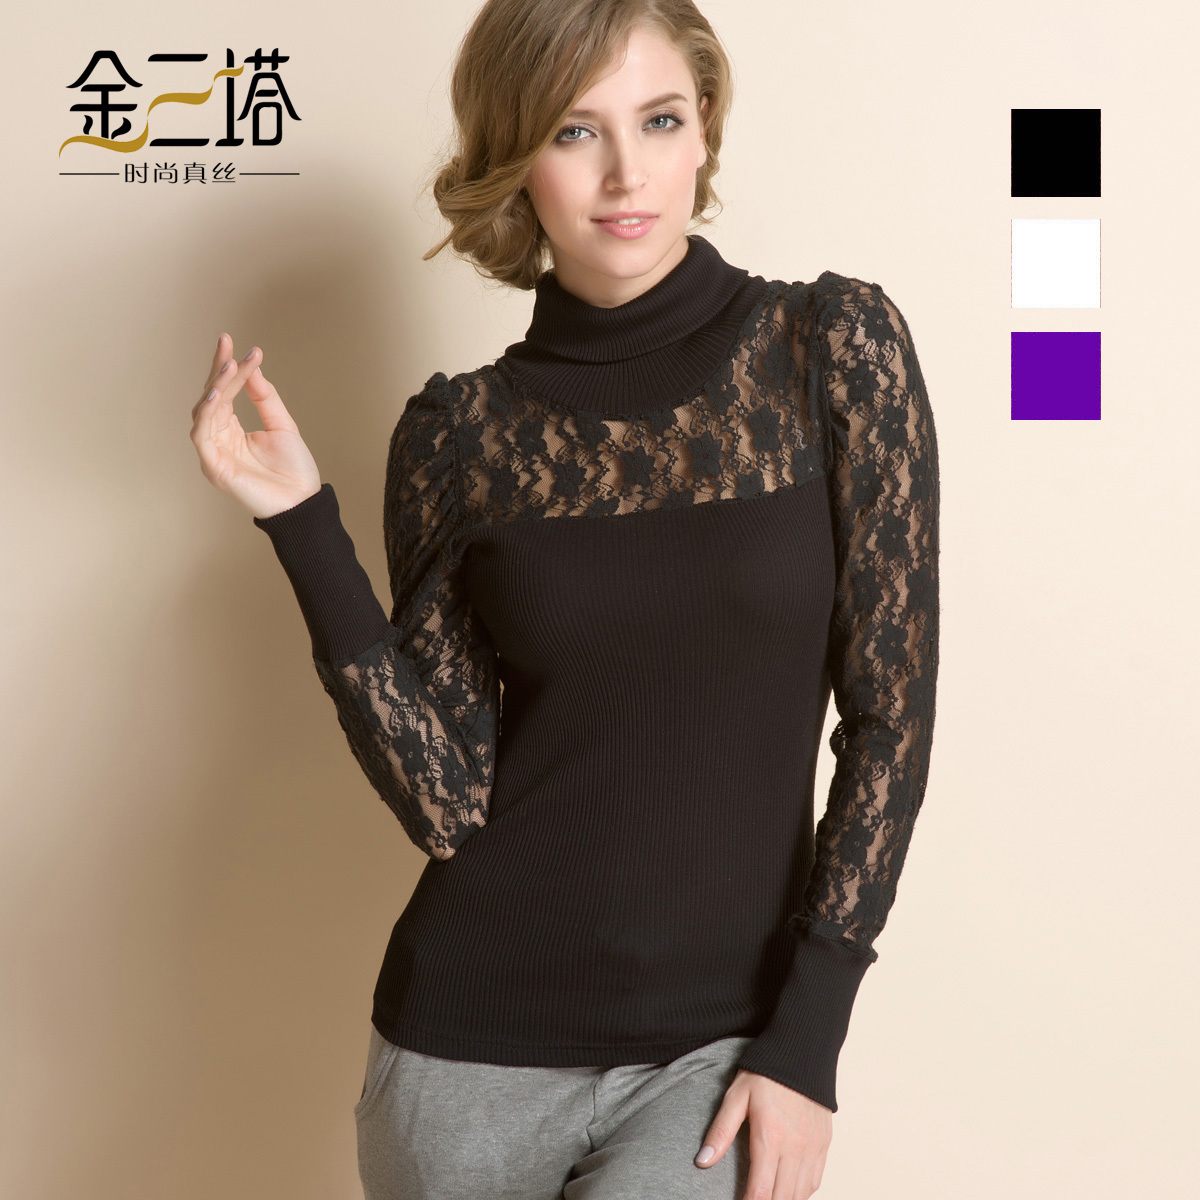 326 silkworm silk lace xiangpin turtleneck long-sleeve basic shirt autumn